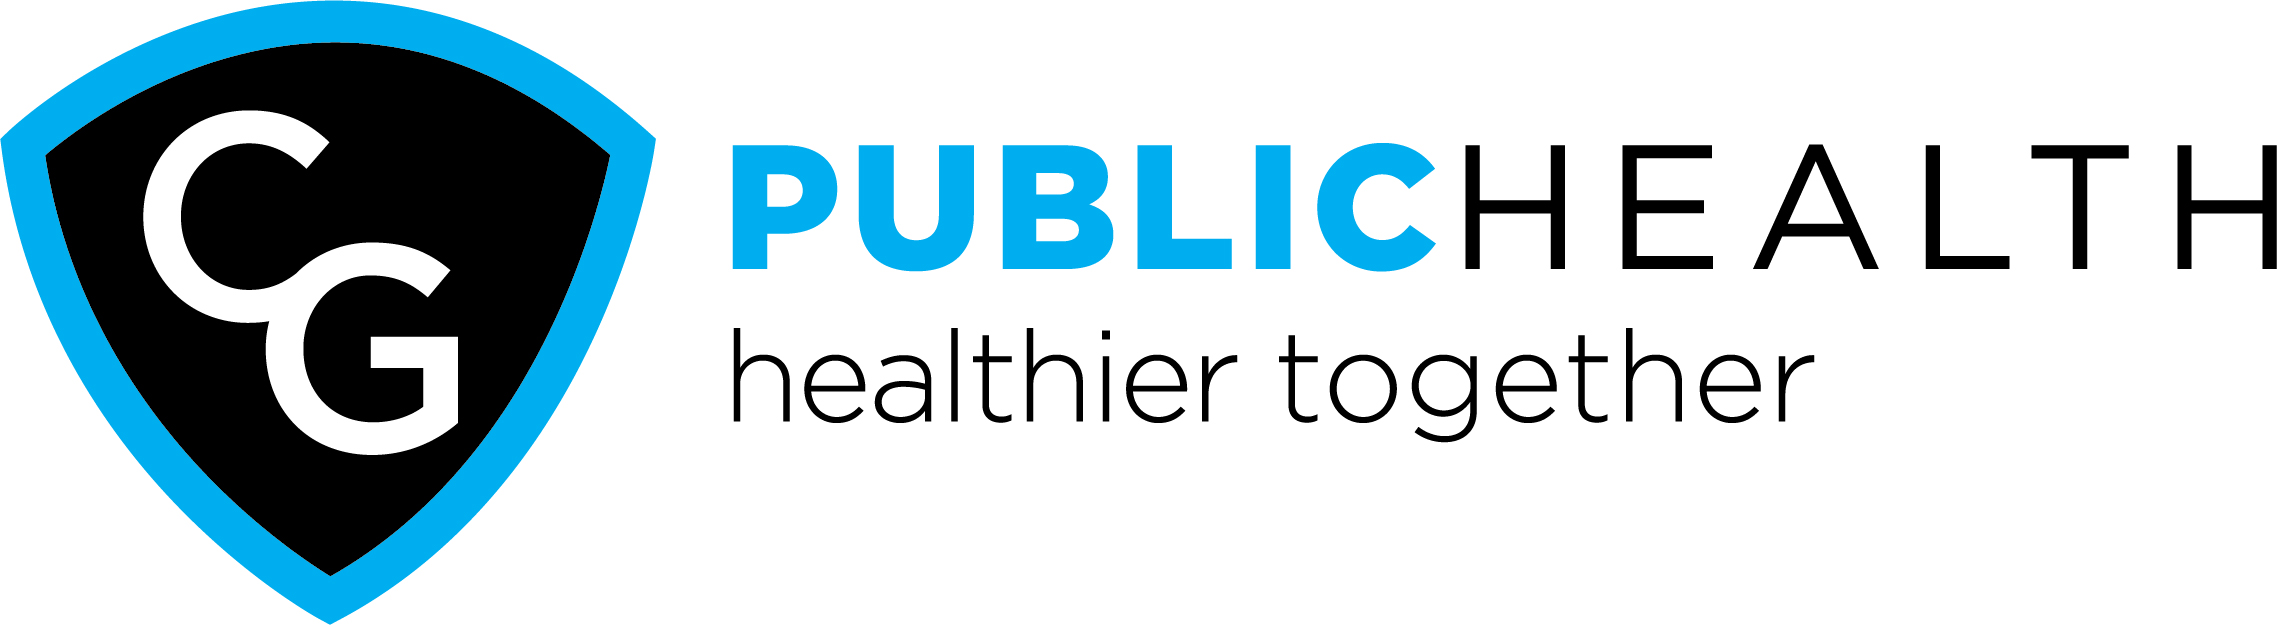 CG Public Health